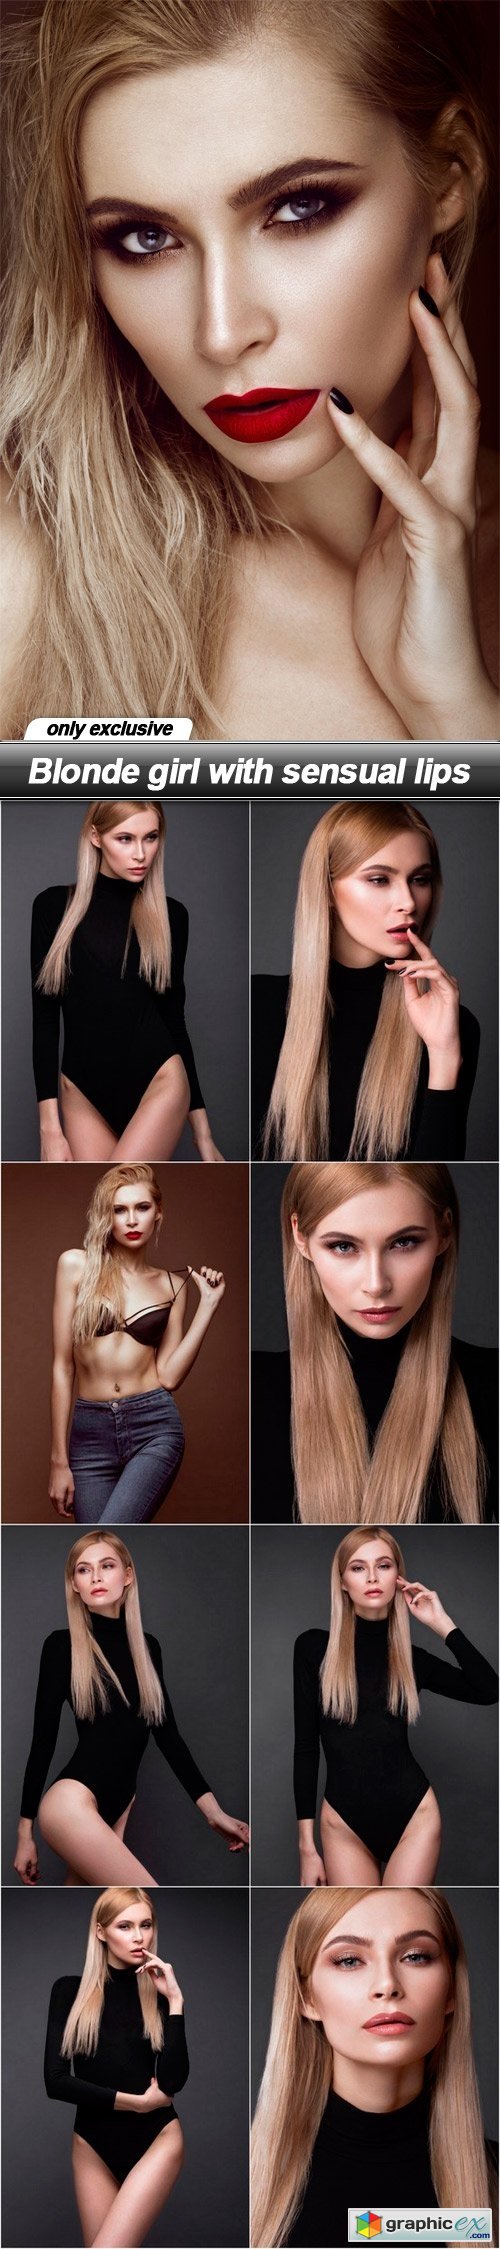 Blonde girl with sensual lips - 9 UHQ JPEG